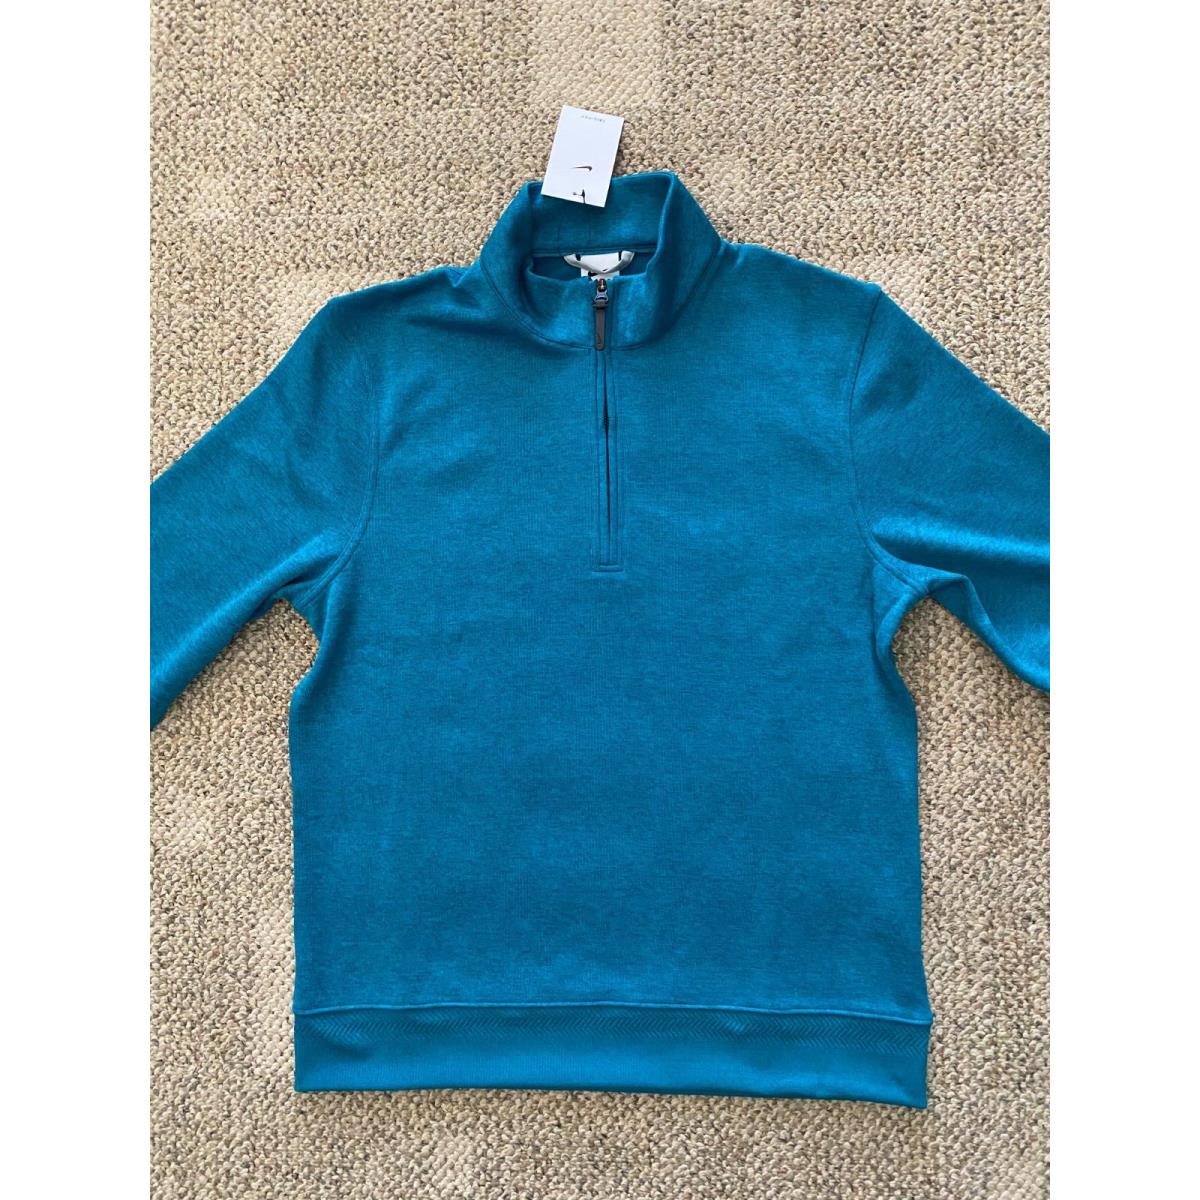 Men`s Size M Nike Dri-fit 1/2 Zip Pullover Golf Top Shirt Teal Green DH0986-367